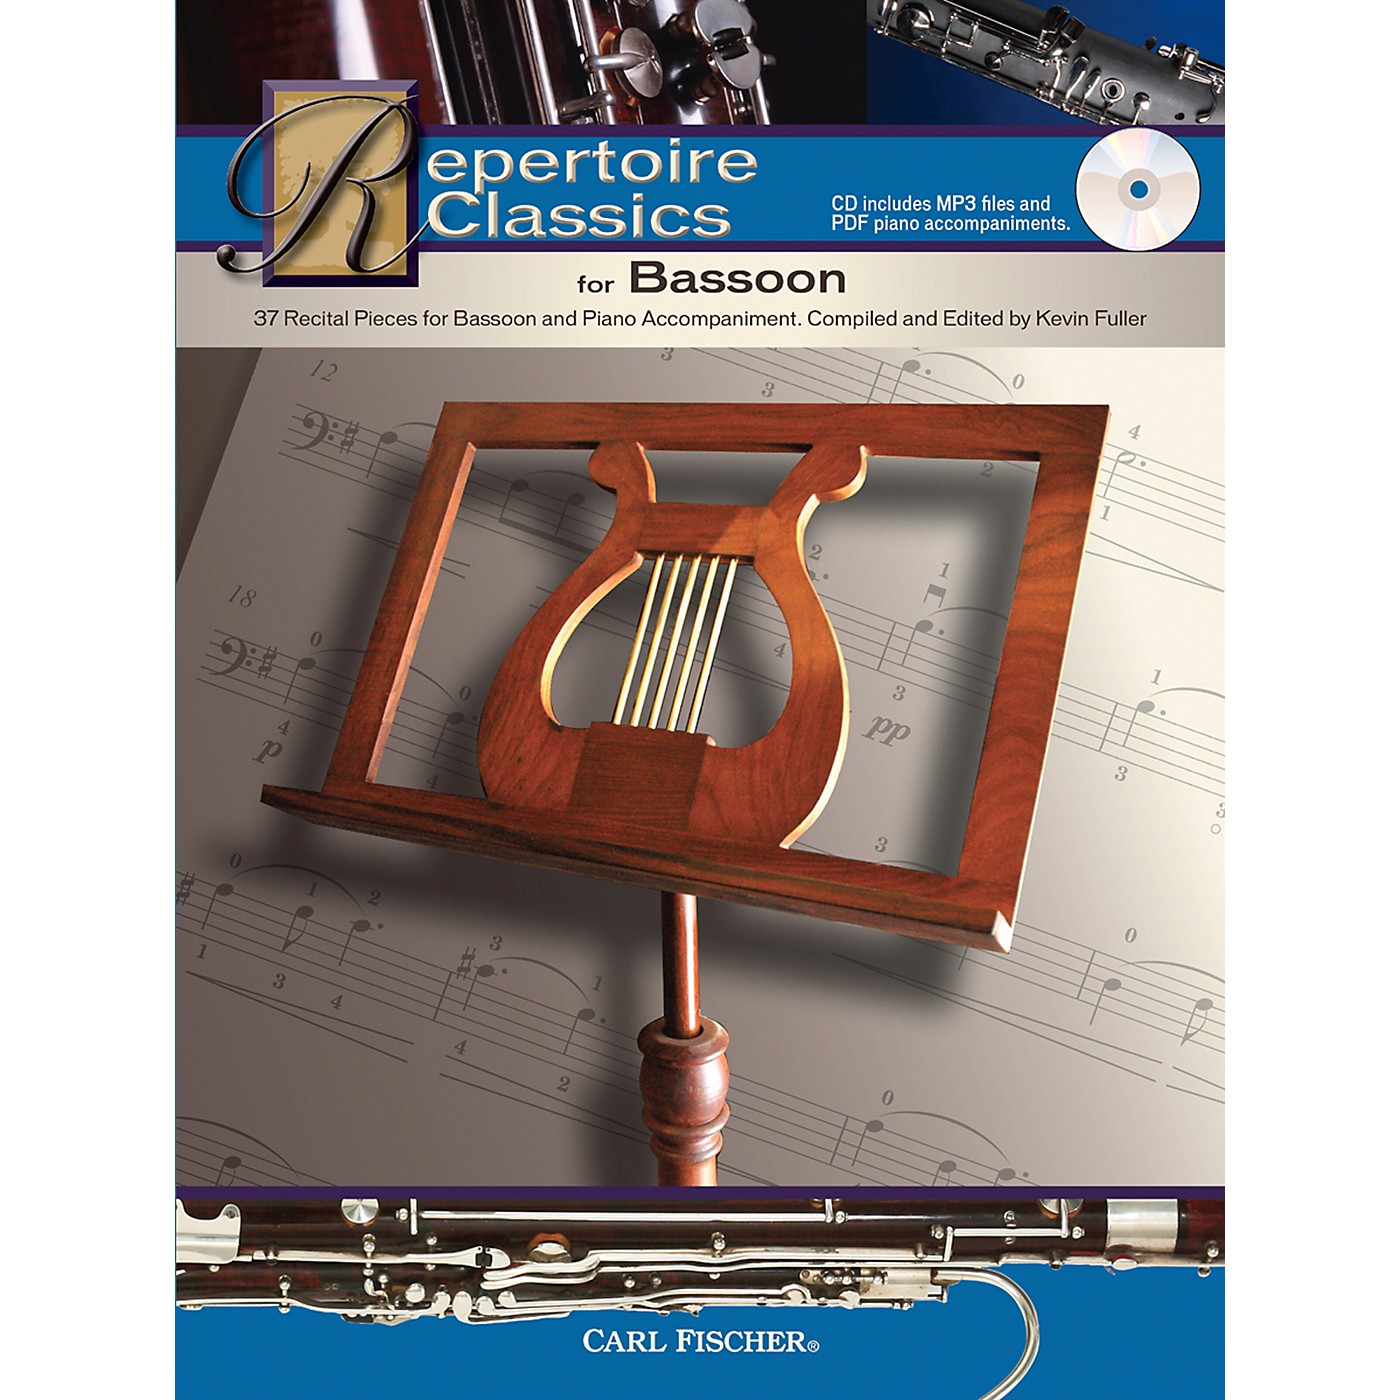 Carl Fischer Repertoire Classics for Bassoon (Bassoon & Piano Accompaniment) Book/CD thumbnail